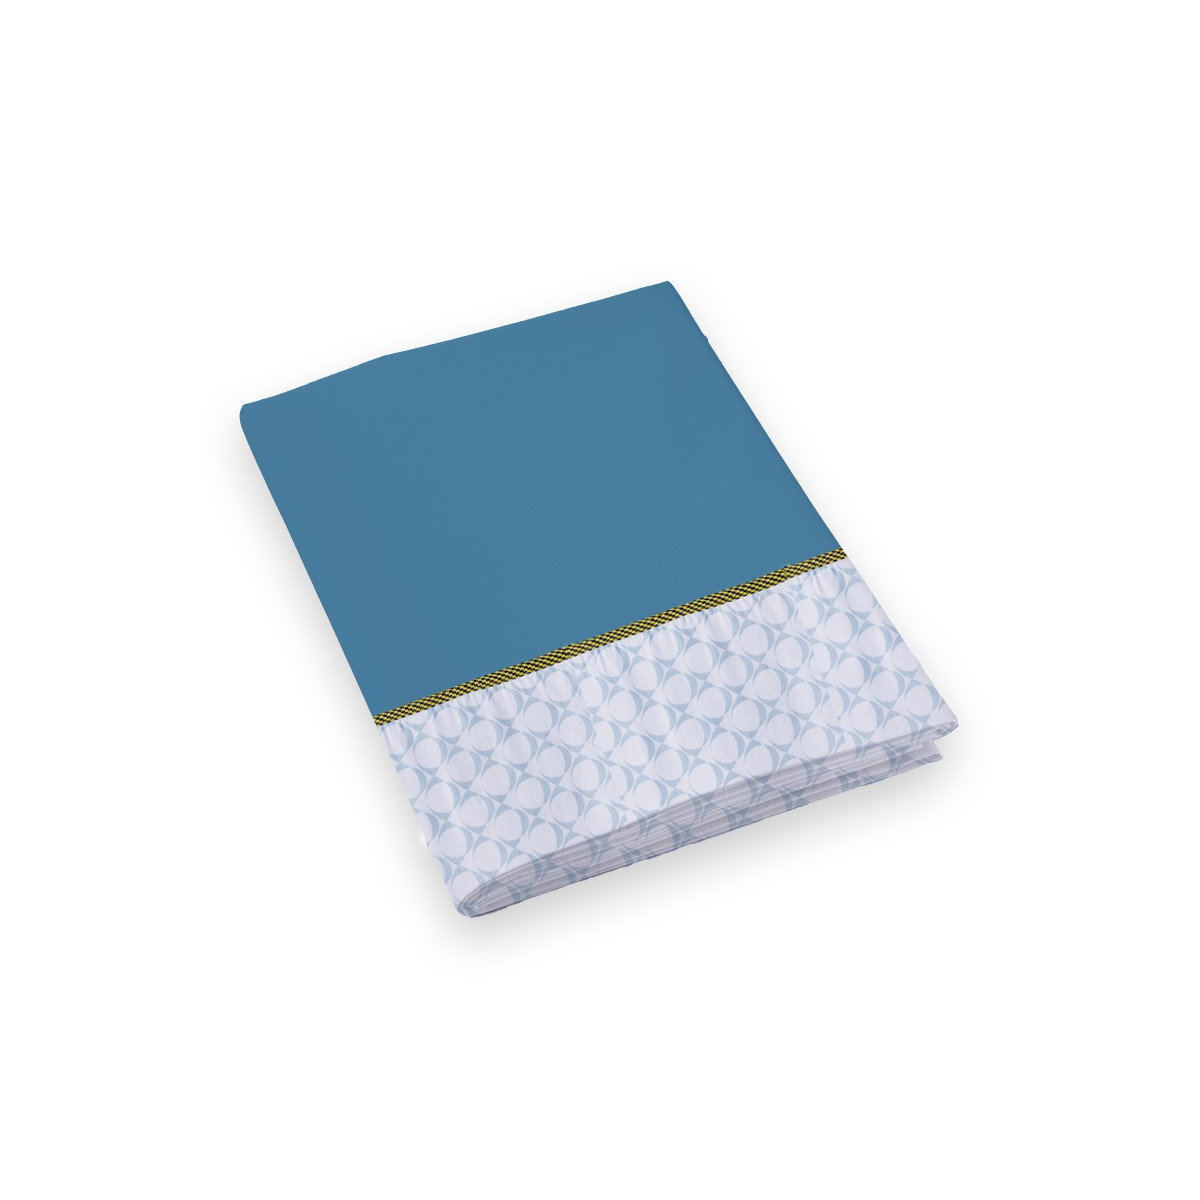 Ernest flat sheet - Cotton percale